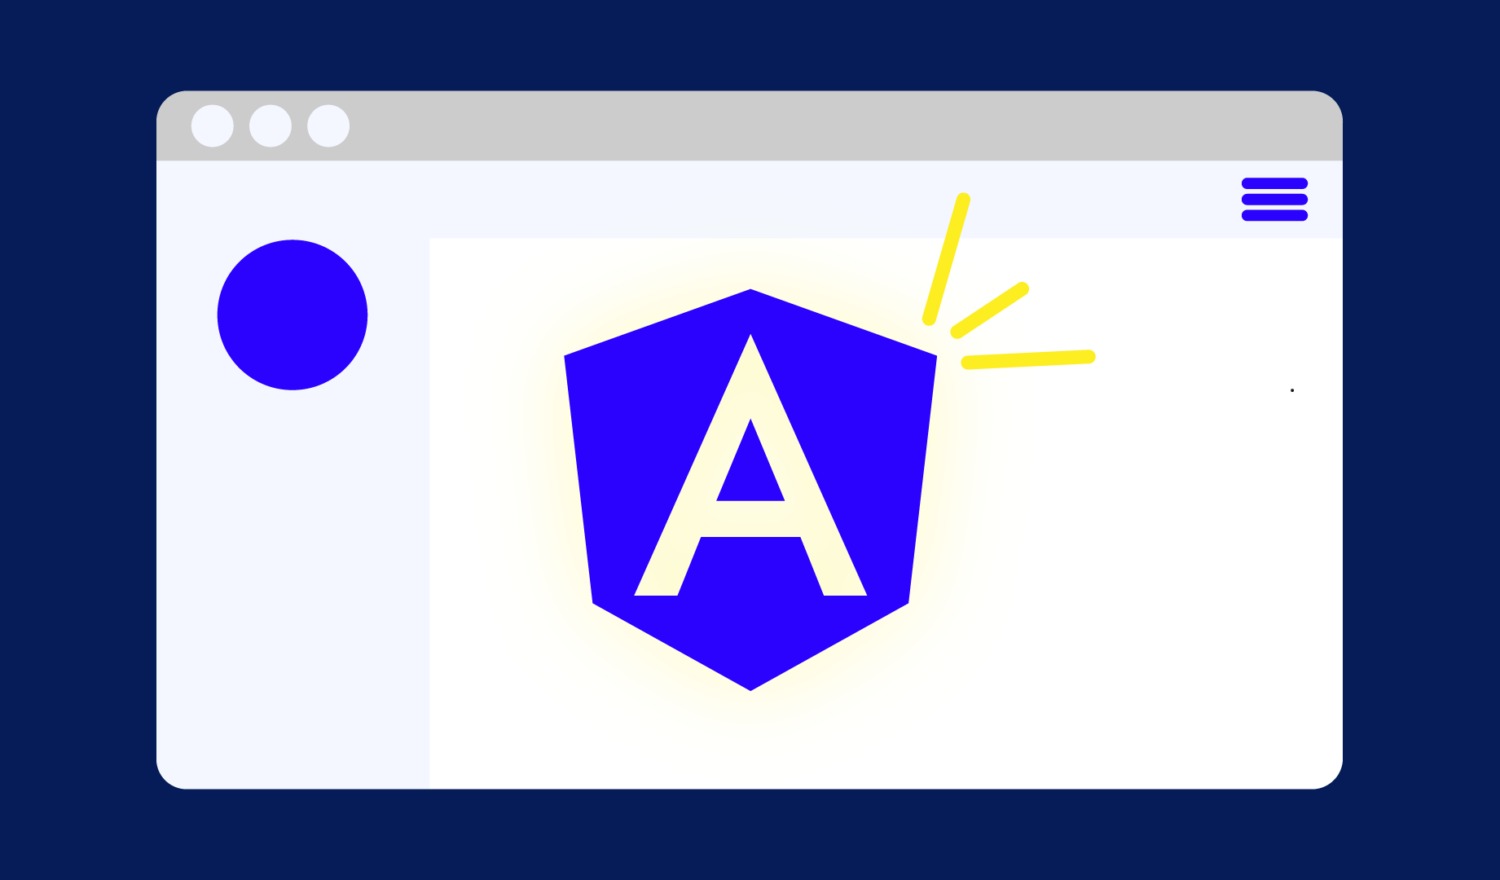 A website with a shiny angular logo